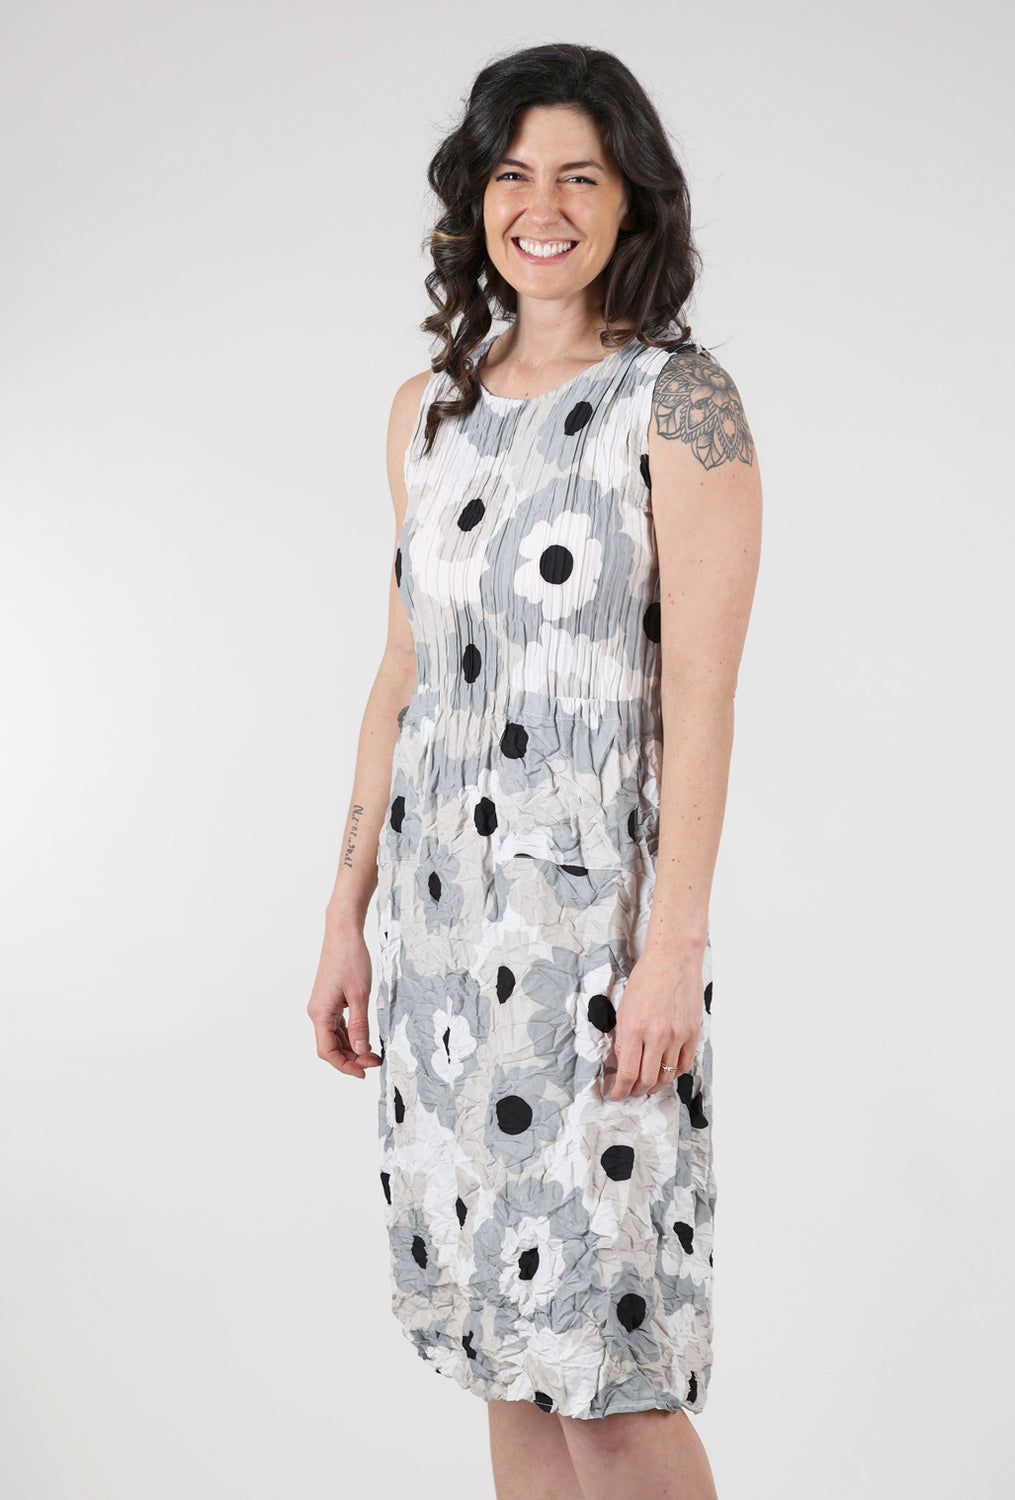 Alquema Smash Pocket Tank Dress, Silver Flower Spot 